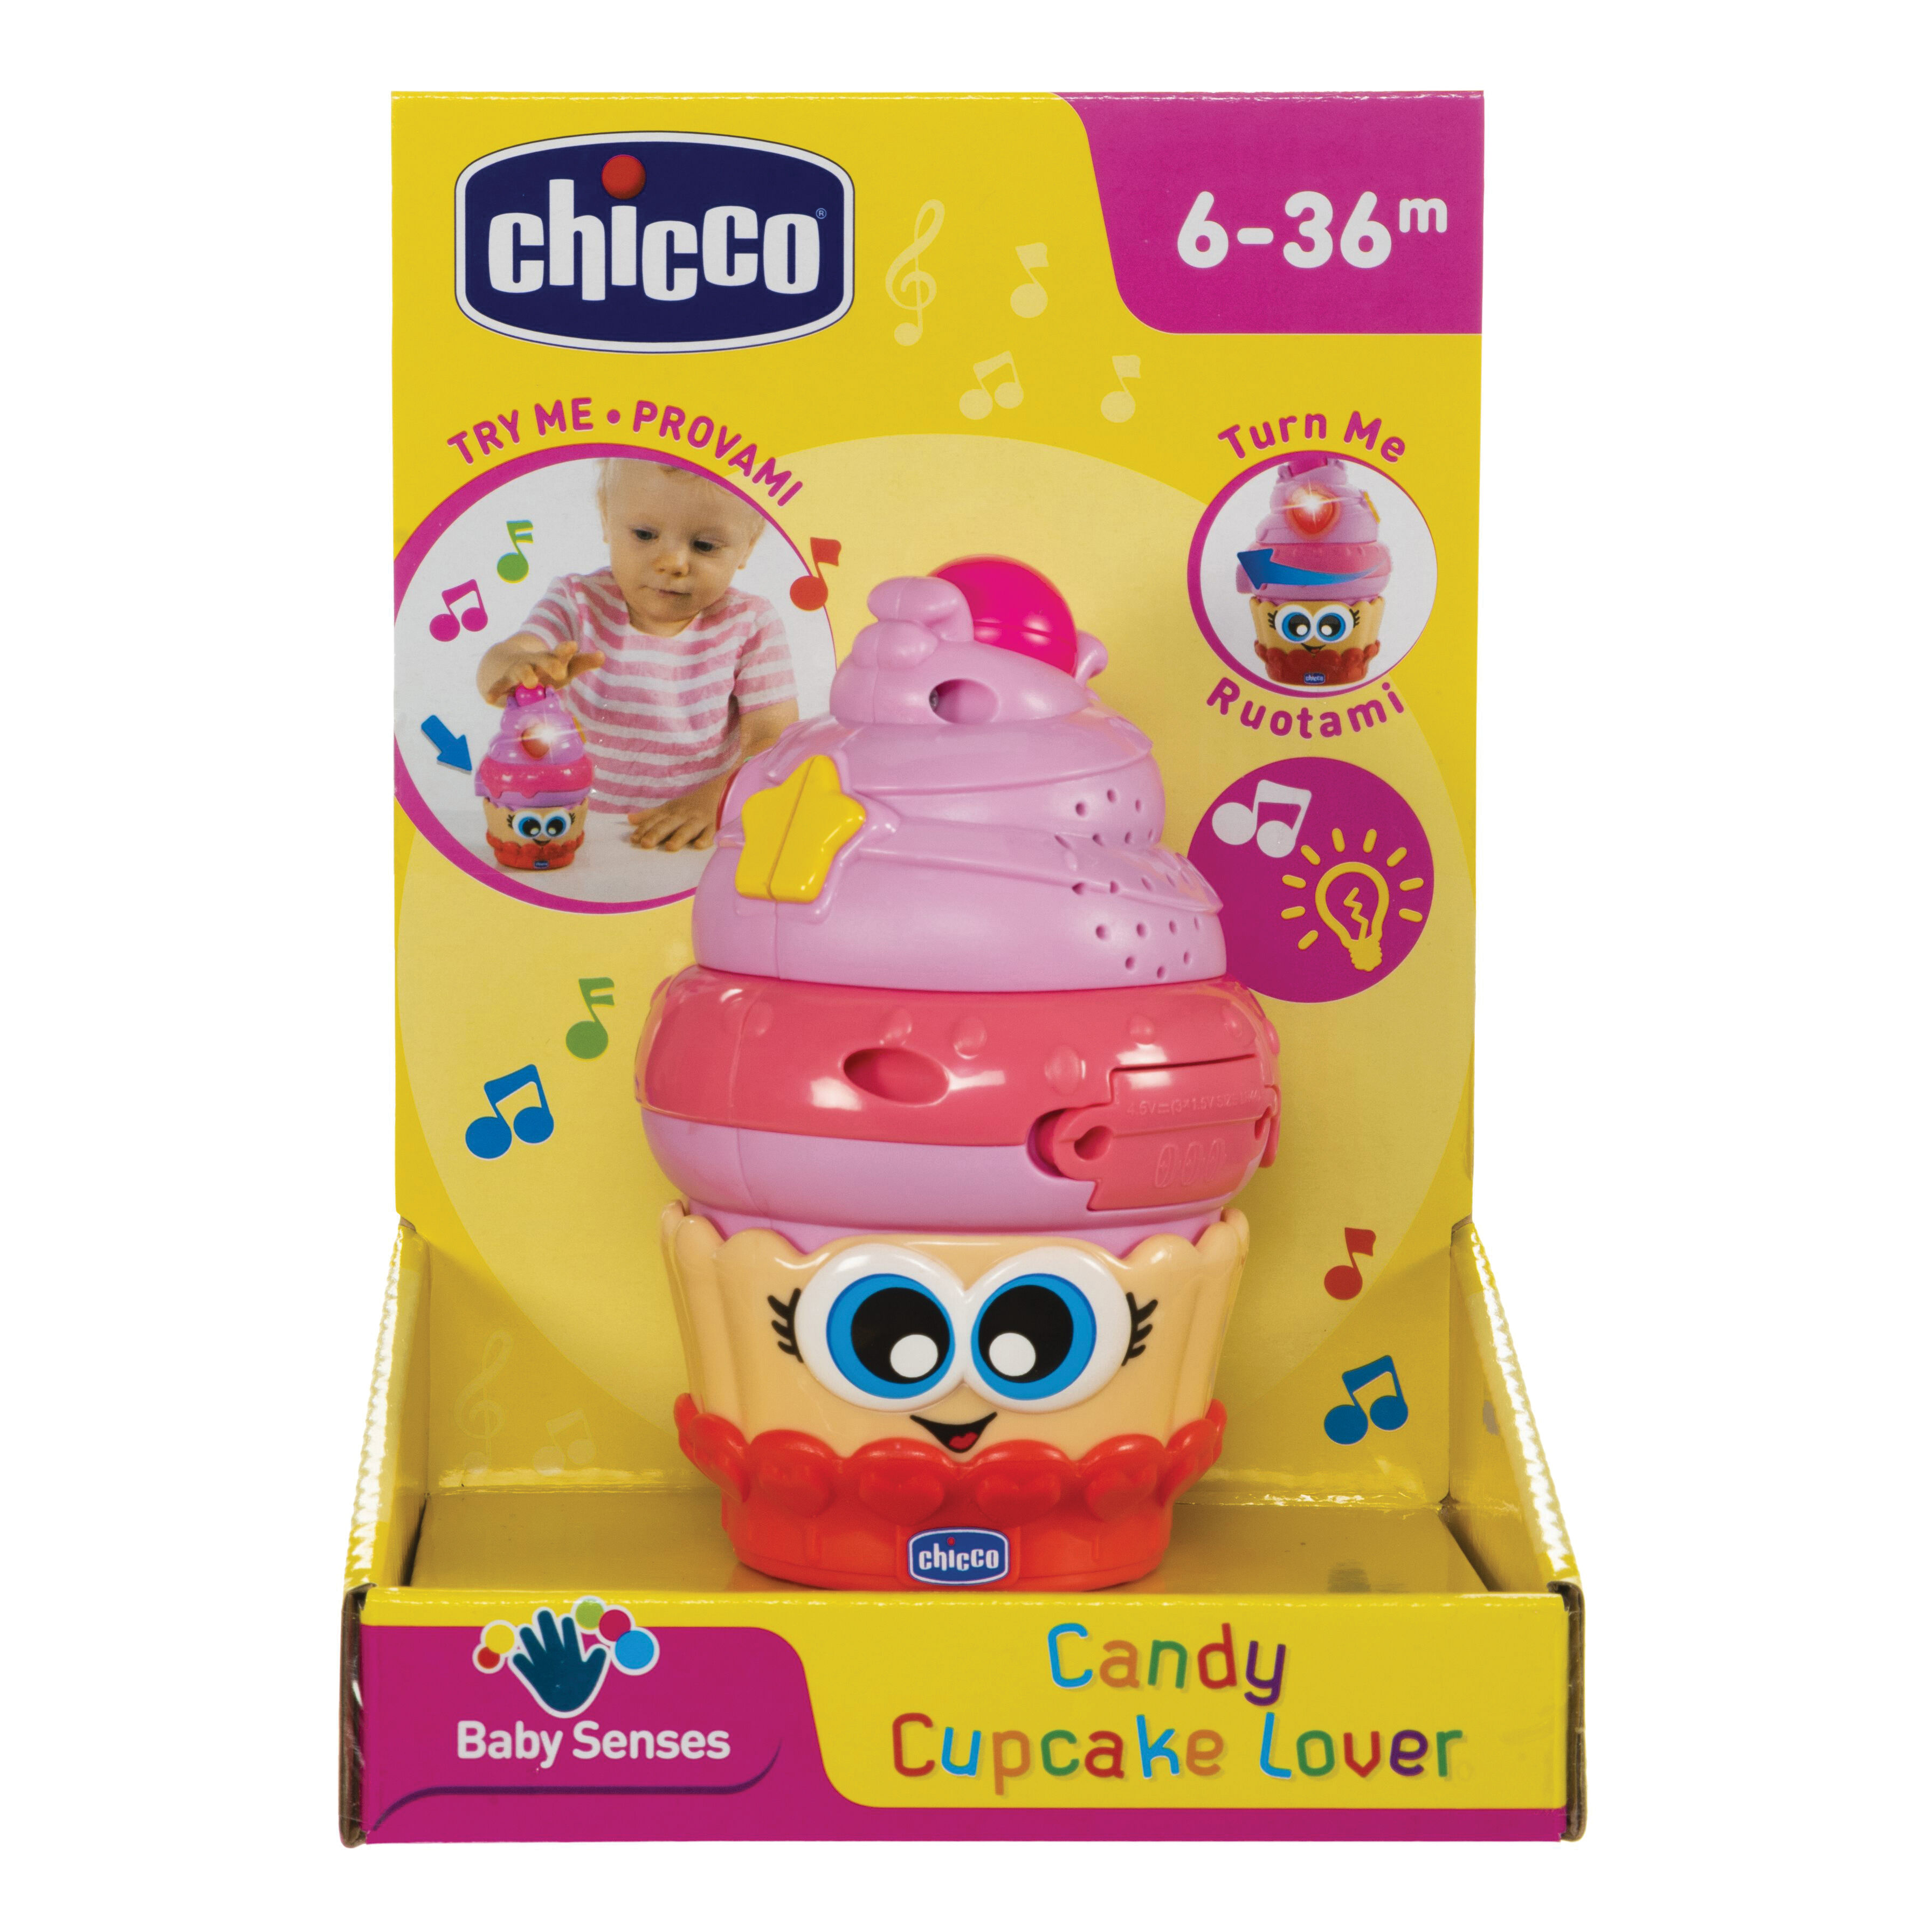 Chicco Ch gioco candy cupcake 6-36m